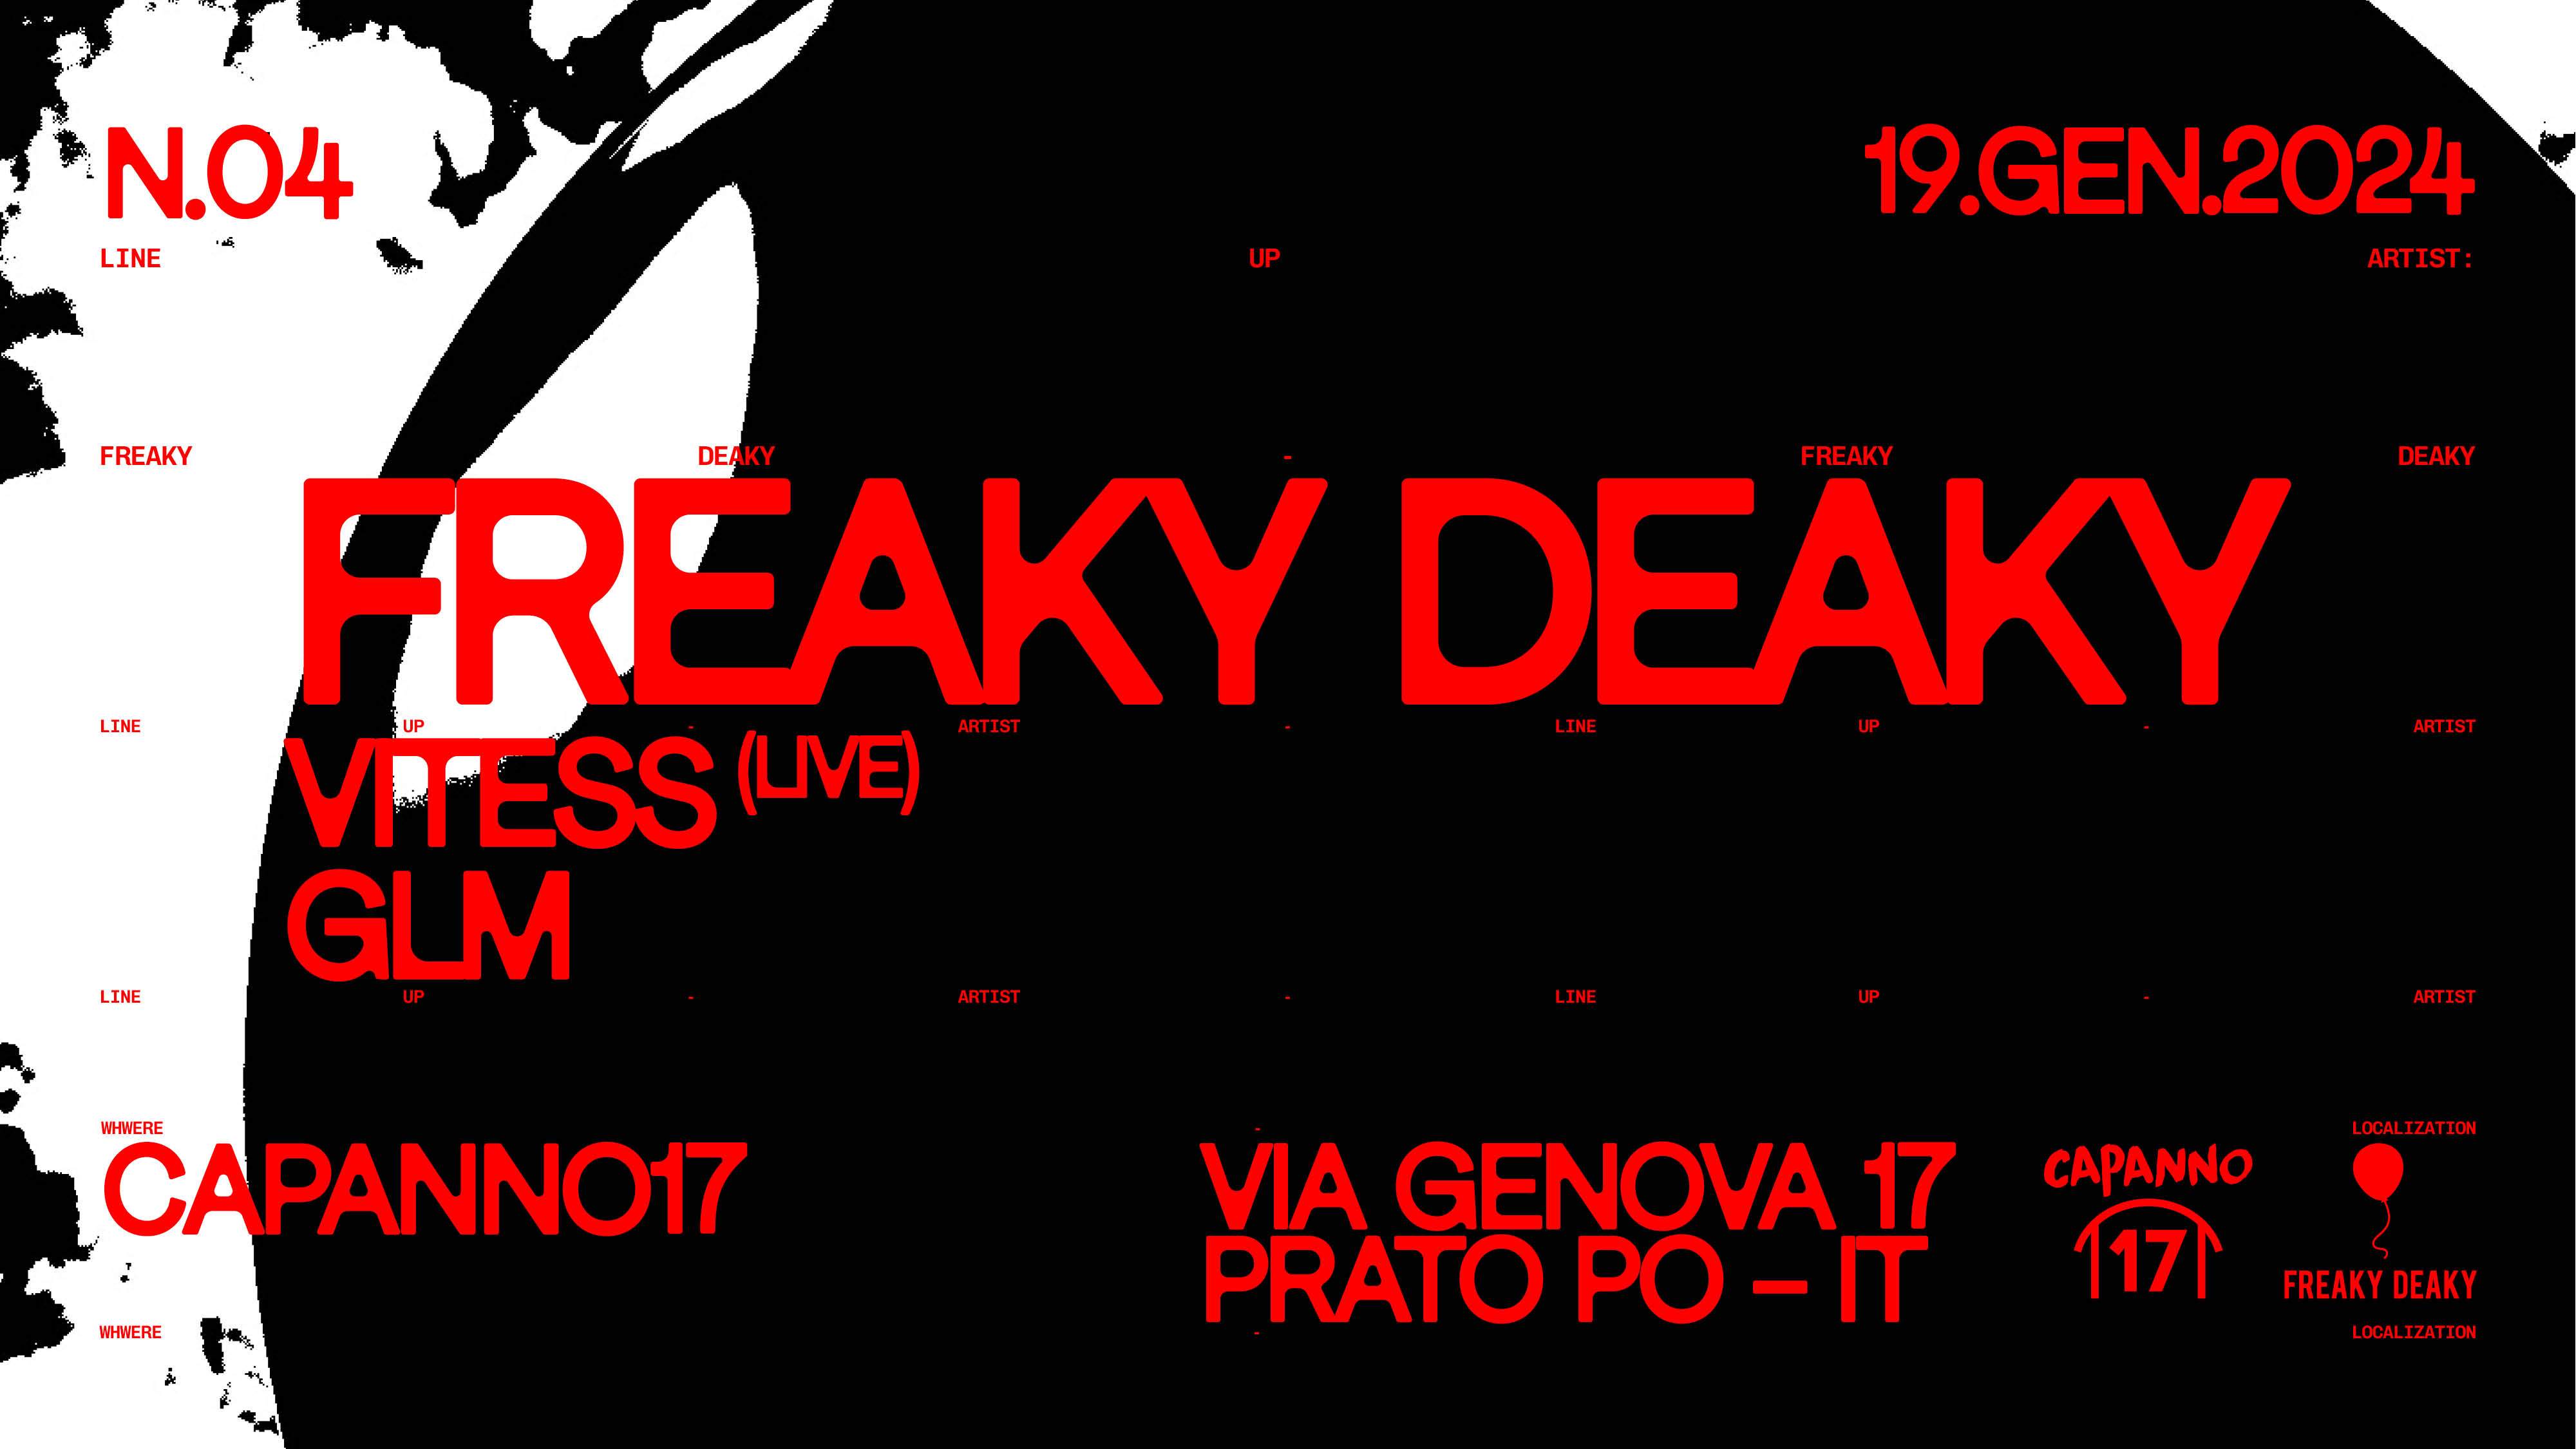 Freaky Deaky with Vitess(Live) - Glm - Página frontal